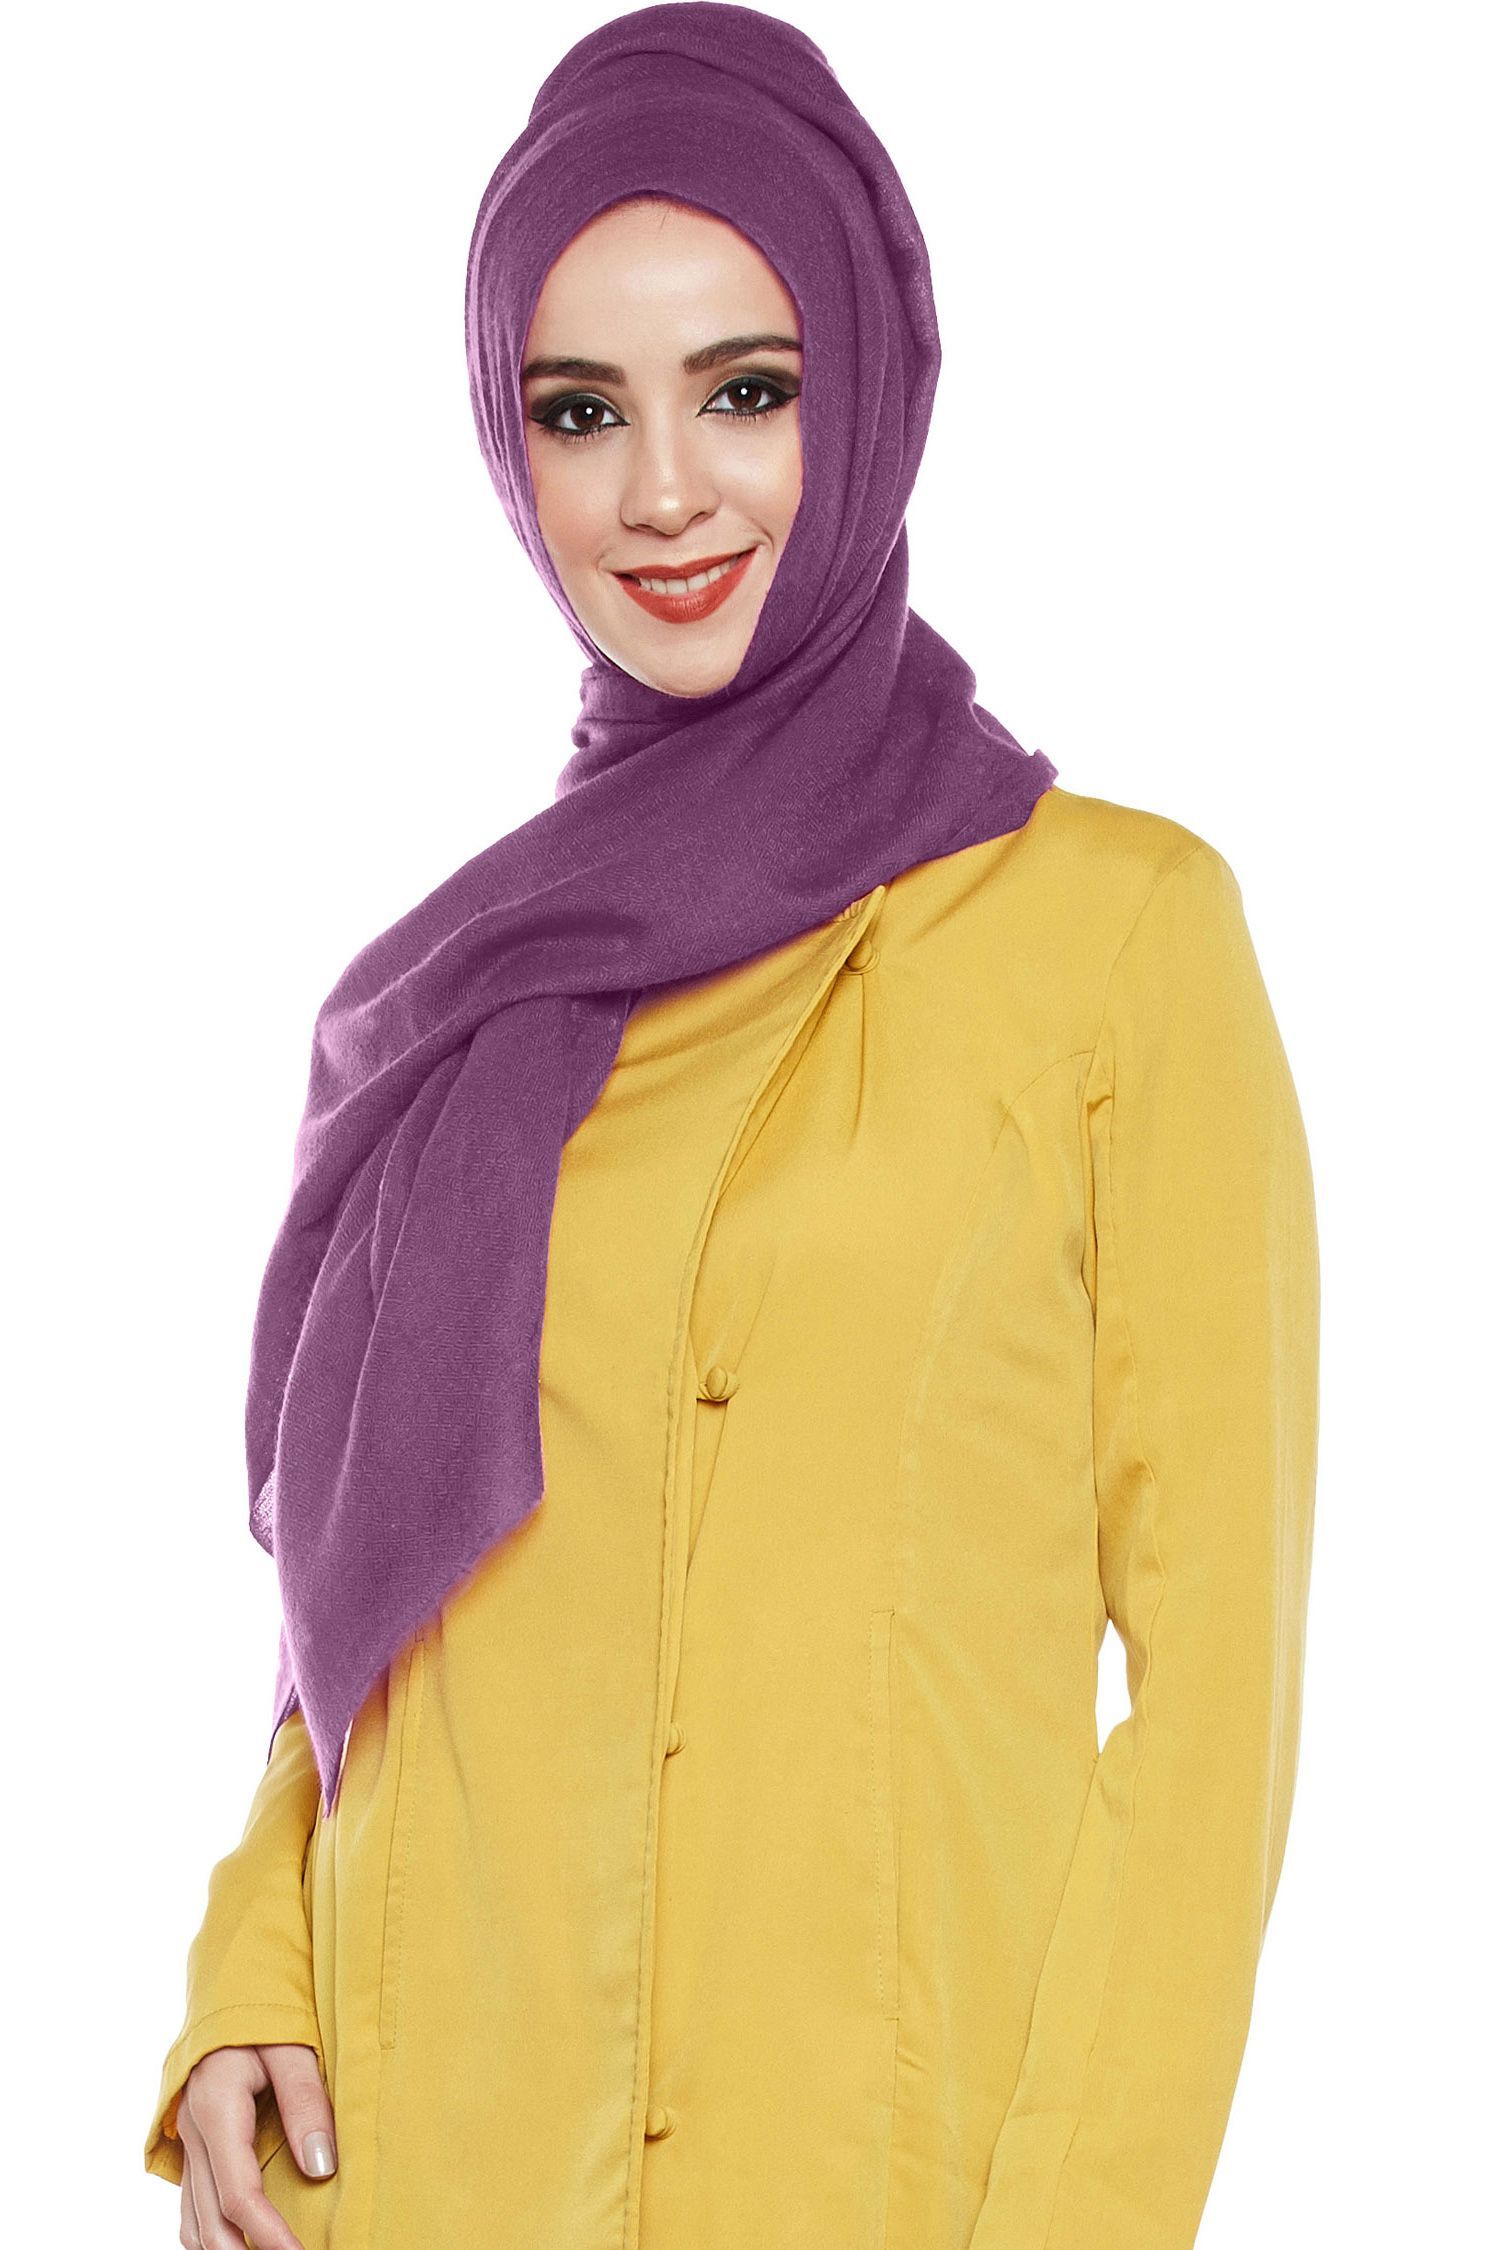 Cranberry Pashmina Hijab | Handmade Cashmere Head Scarf